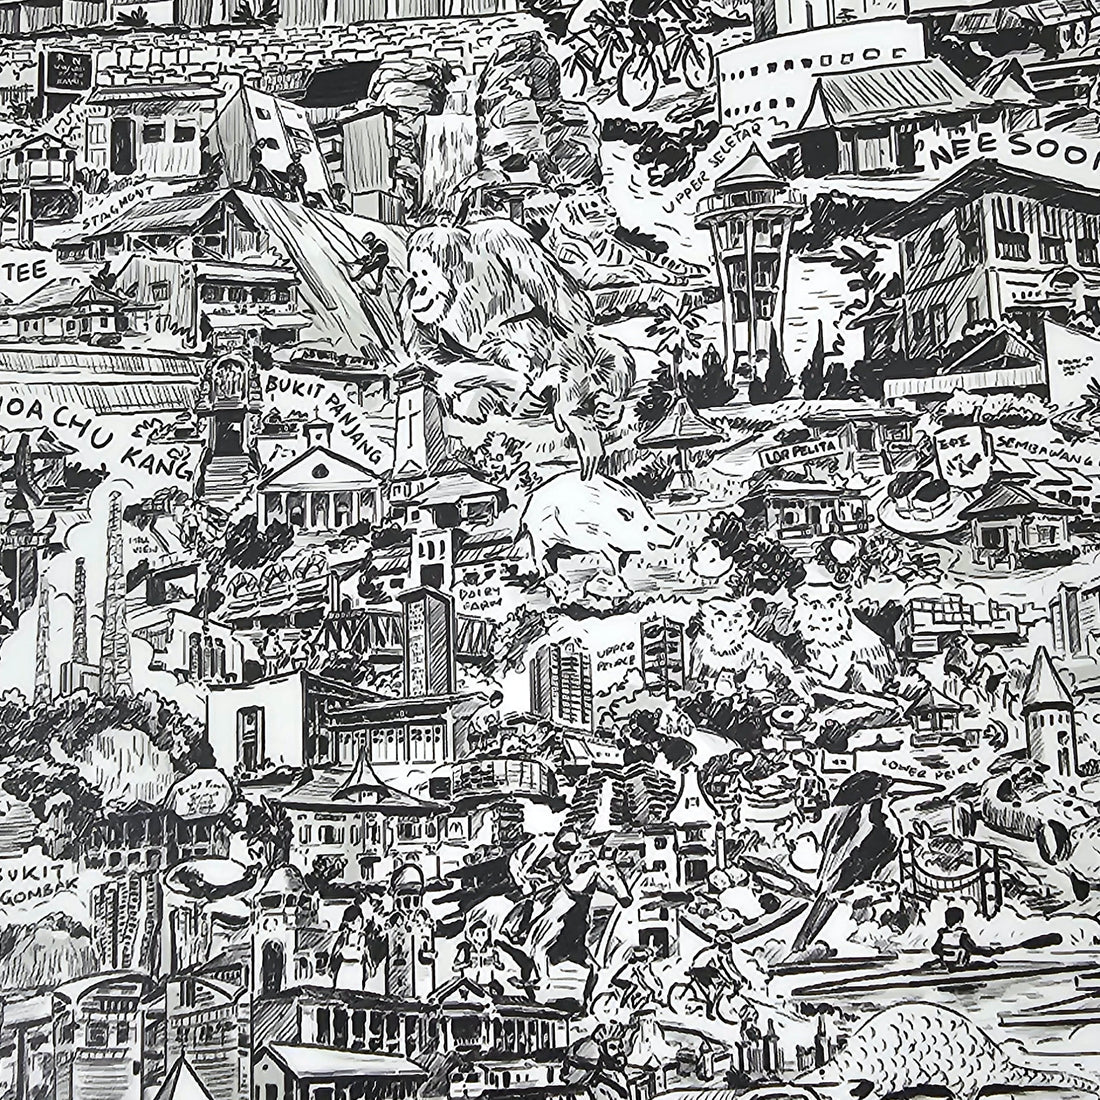 Peta Singapura III Print